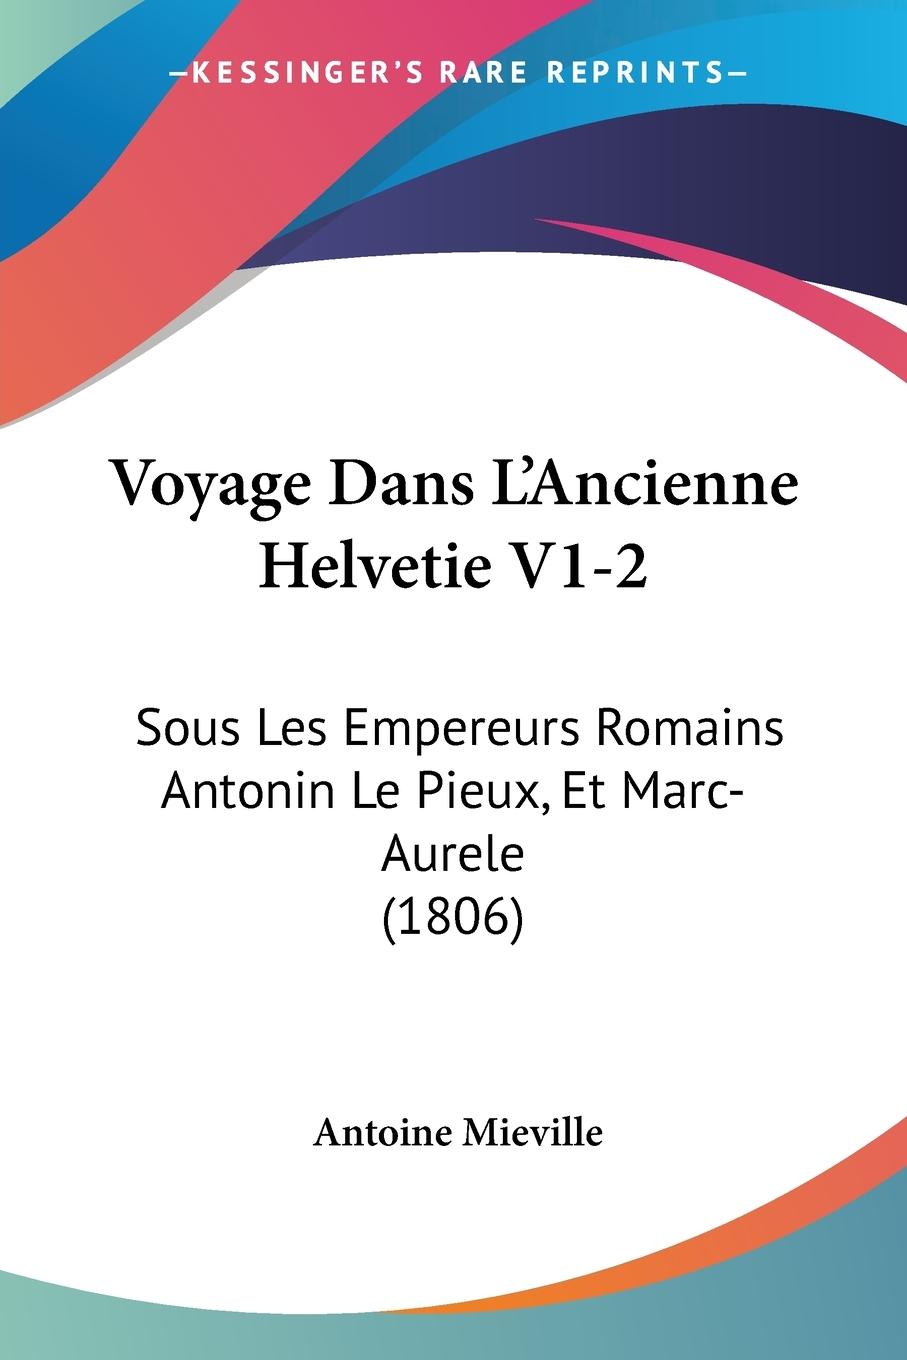 Voyage Dans L Ancienne Helvetie V1-2 - Mieville, Antoine